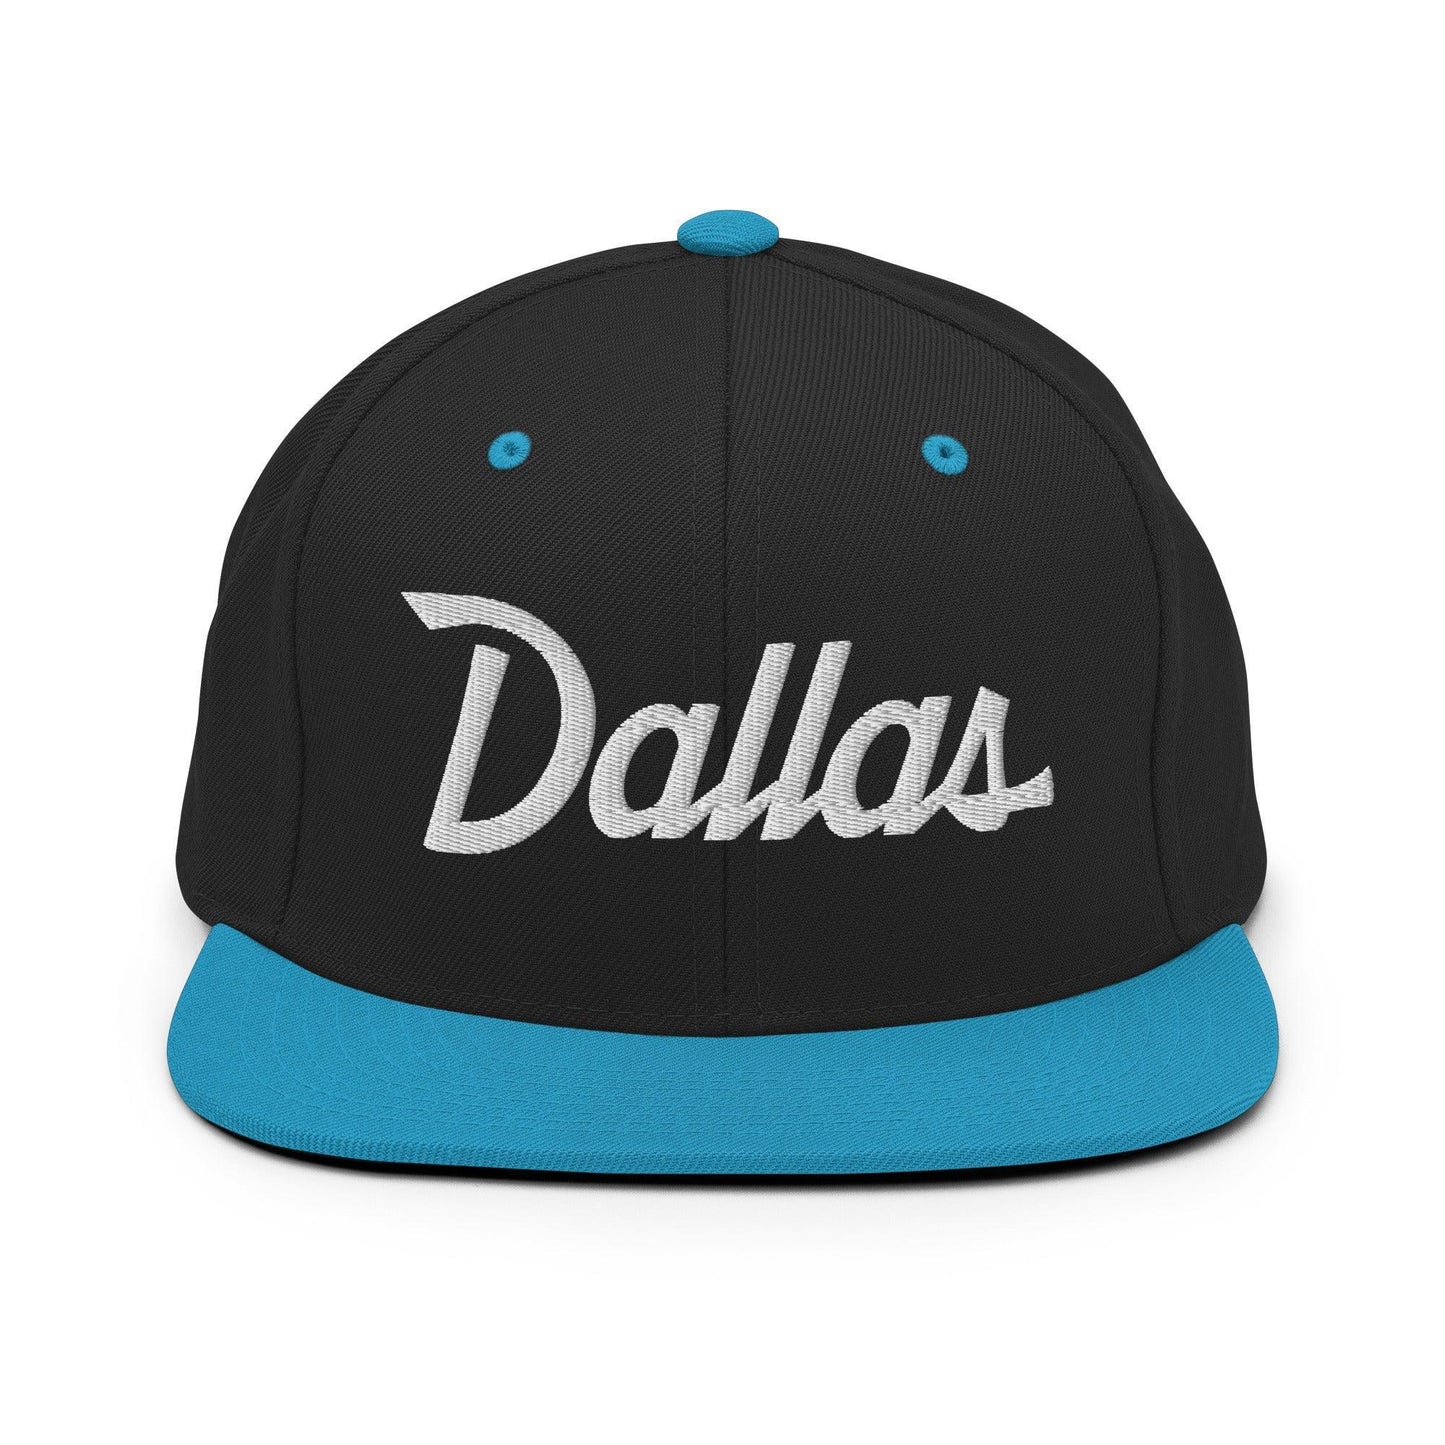 Dallas Script Snapback Hat Black Teal